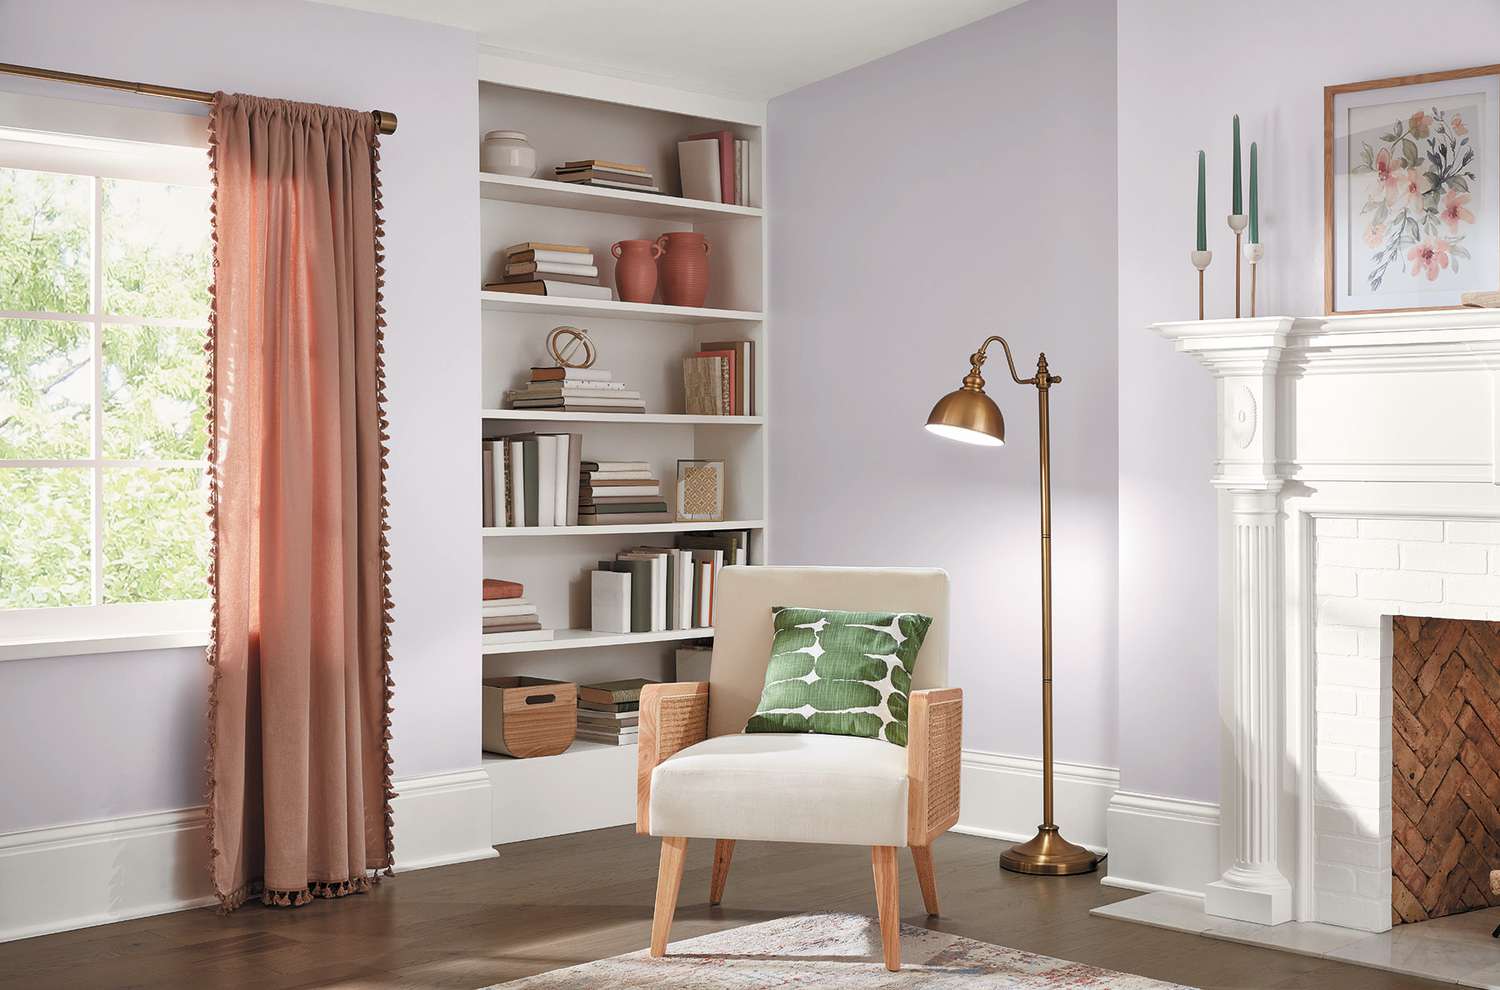 Lavender colored room